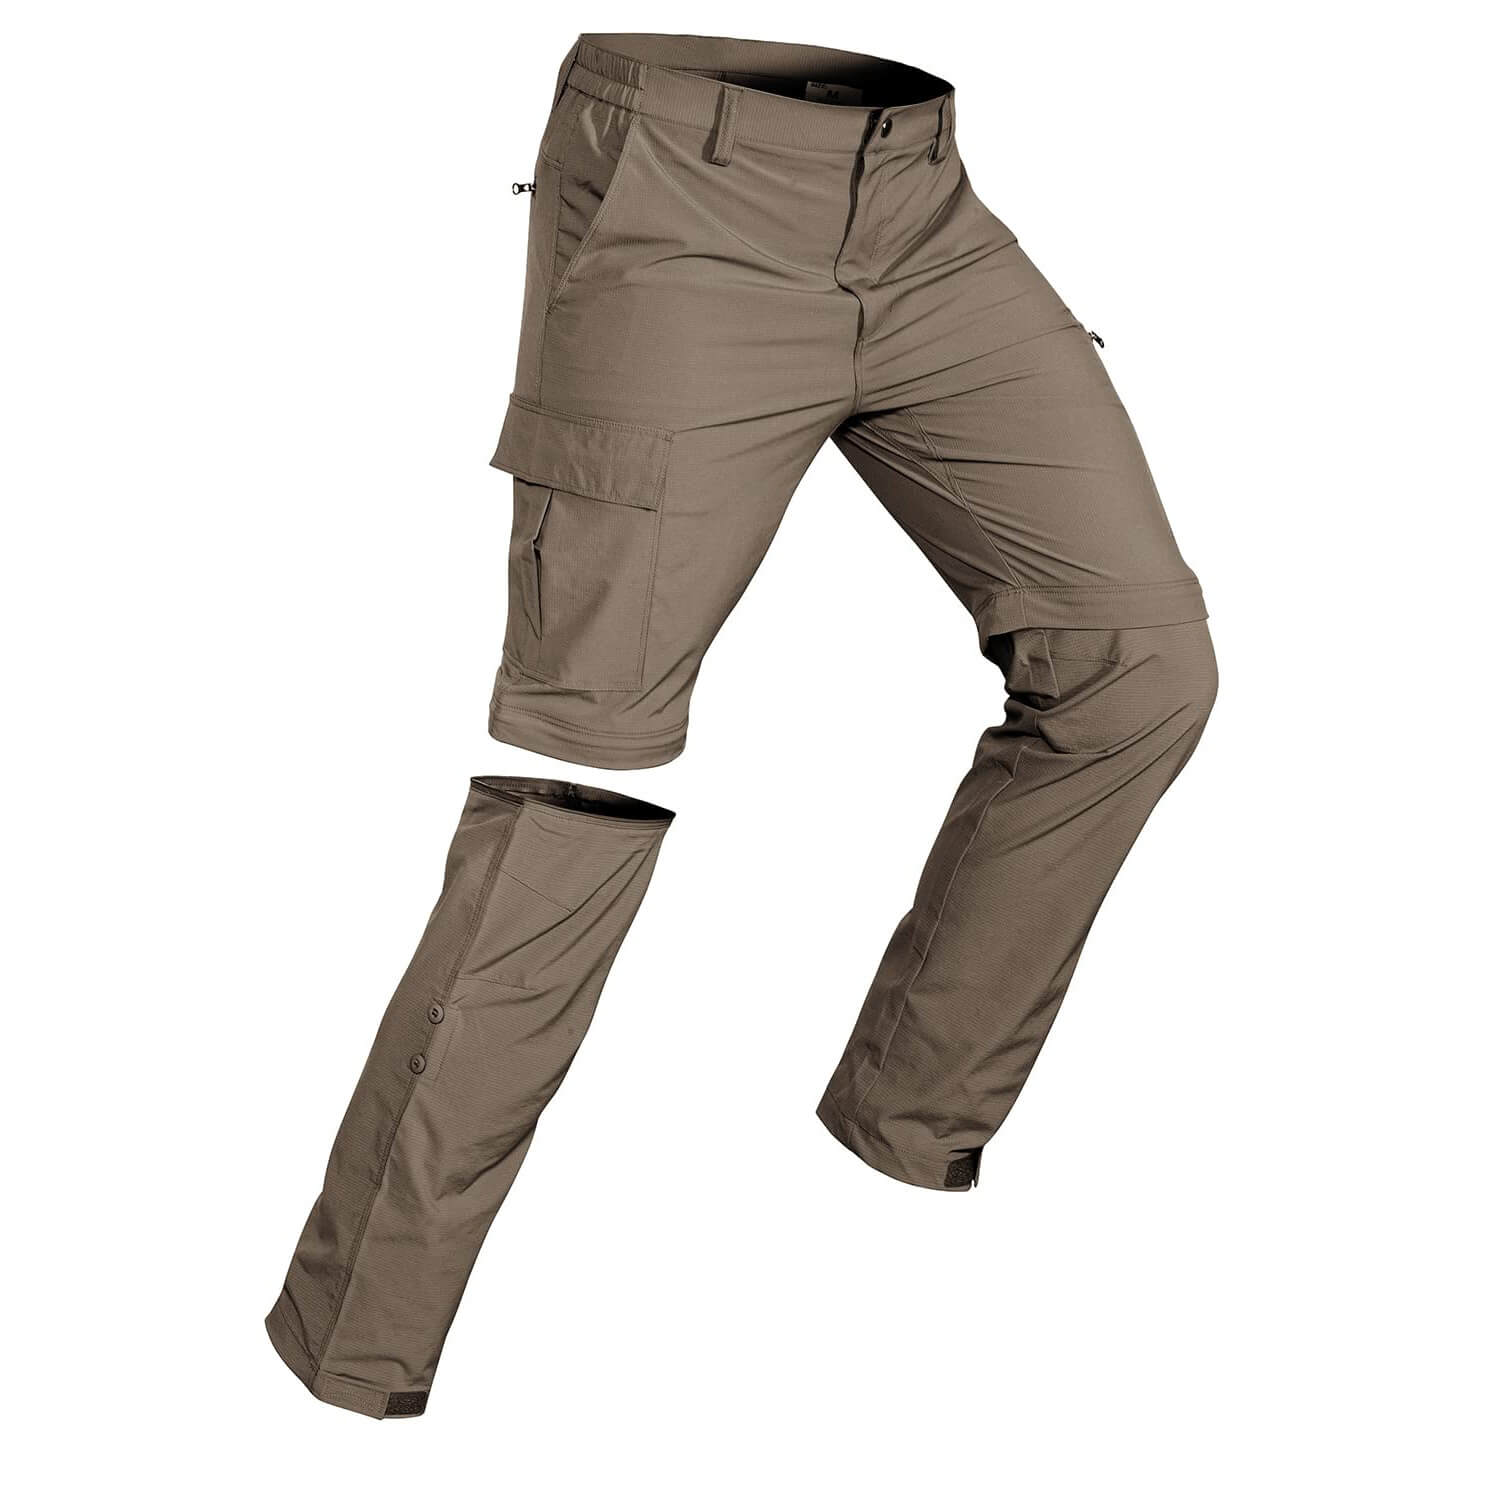 Best Men's Quick-Dry Convertible Hiking Pants - Cycorld Brown / 2XL